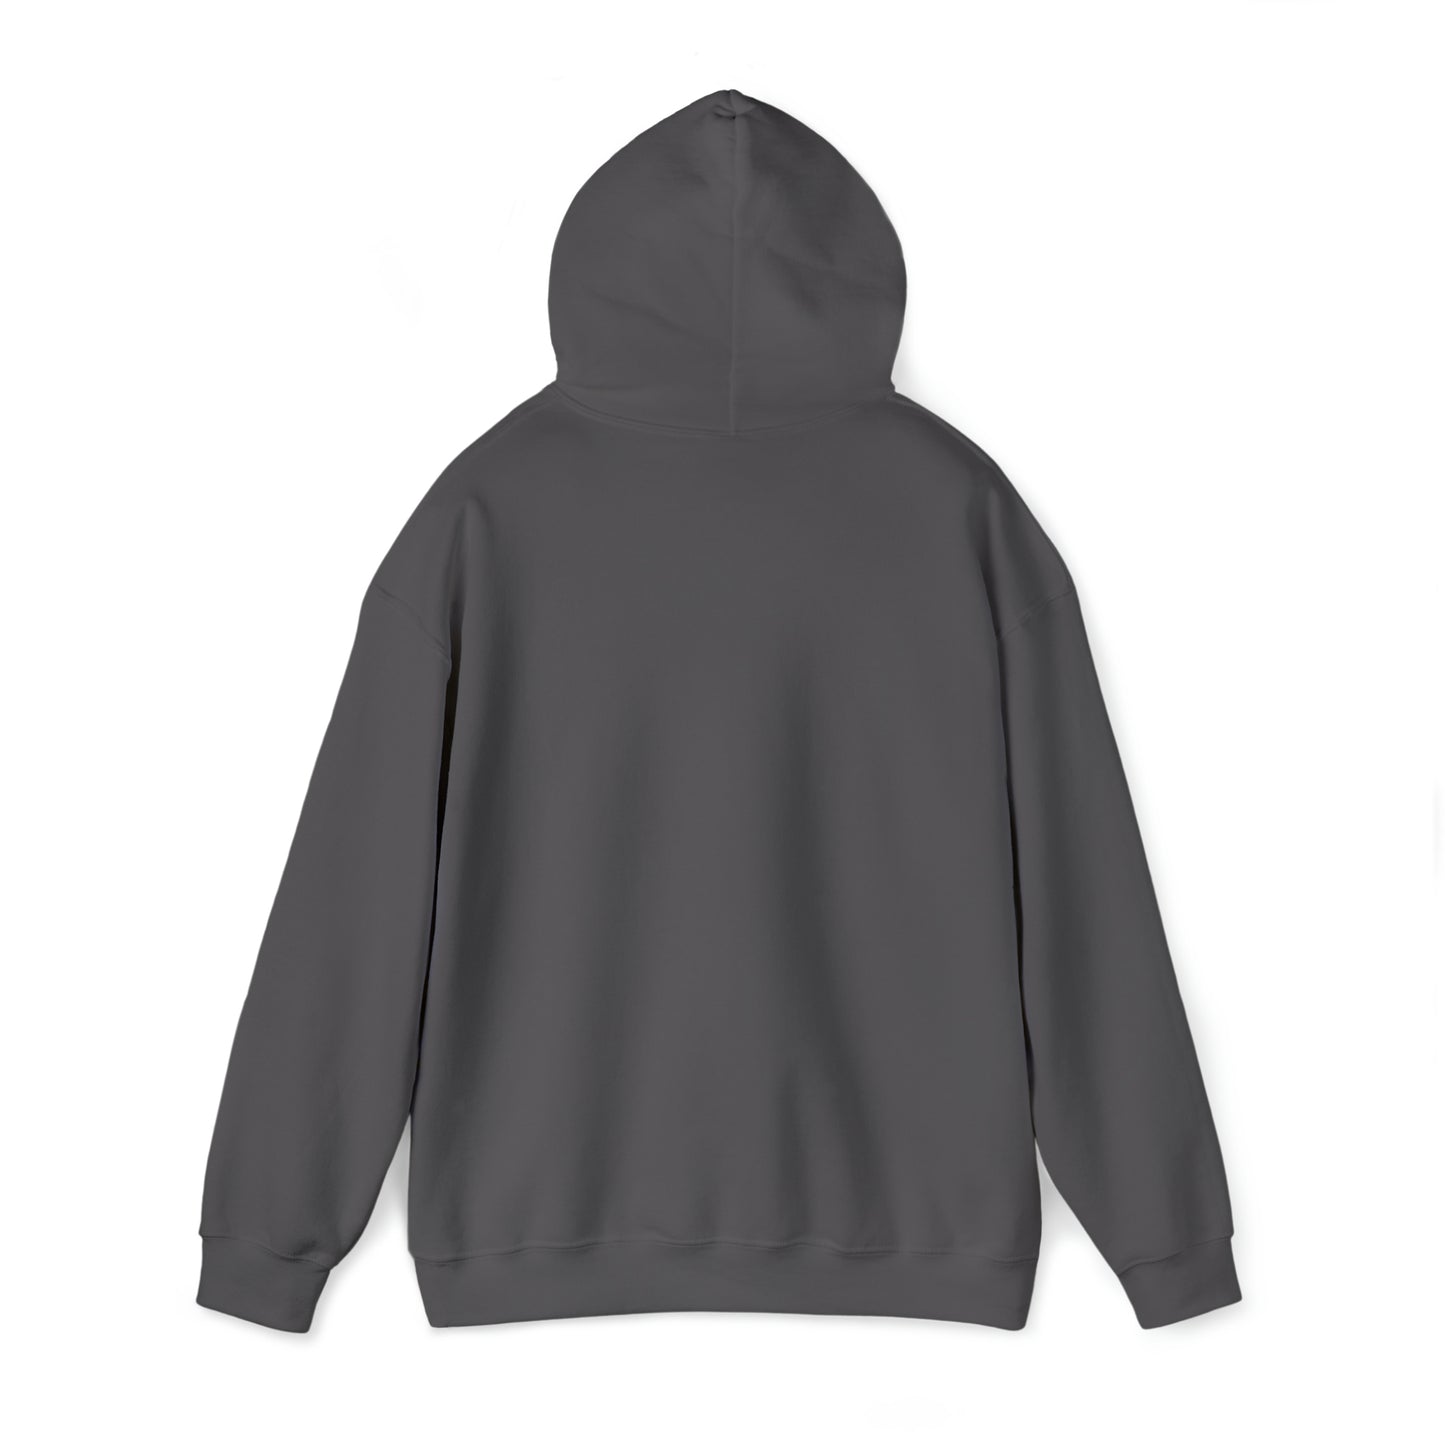 Jesus Strong Unisex Heavy Blend™ Hooded Sweatshirt